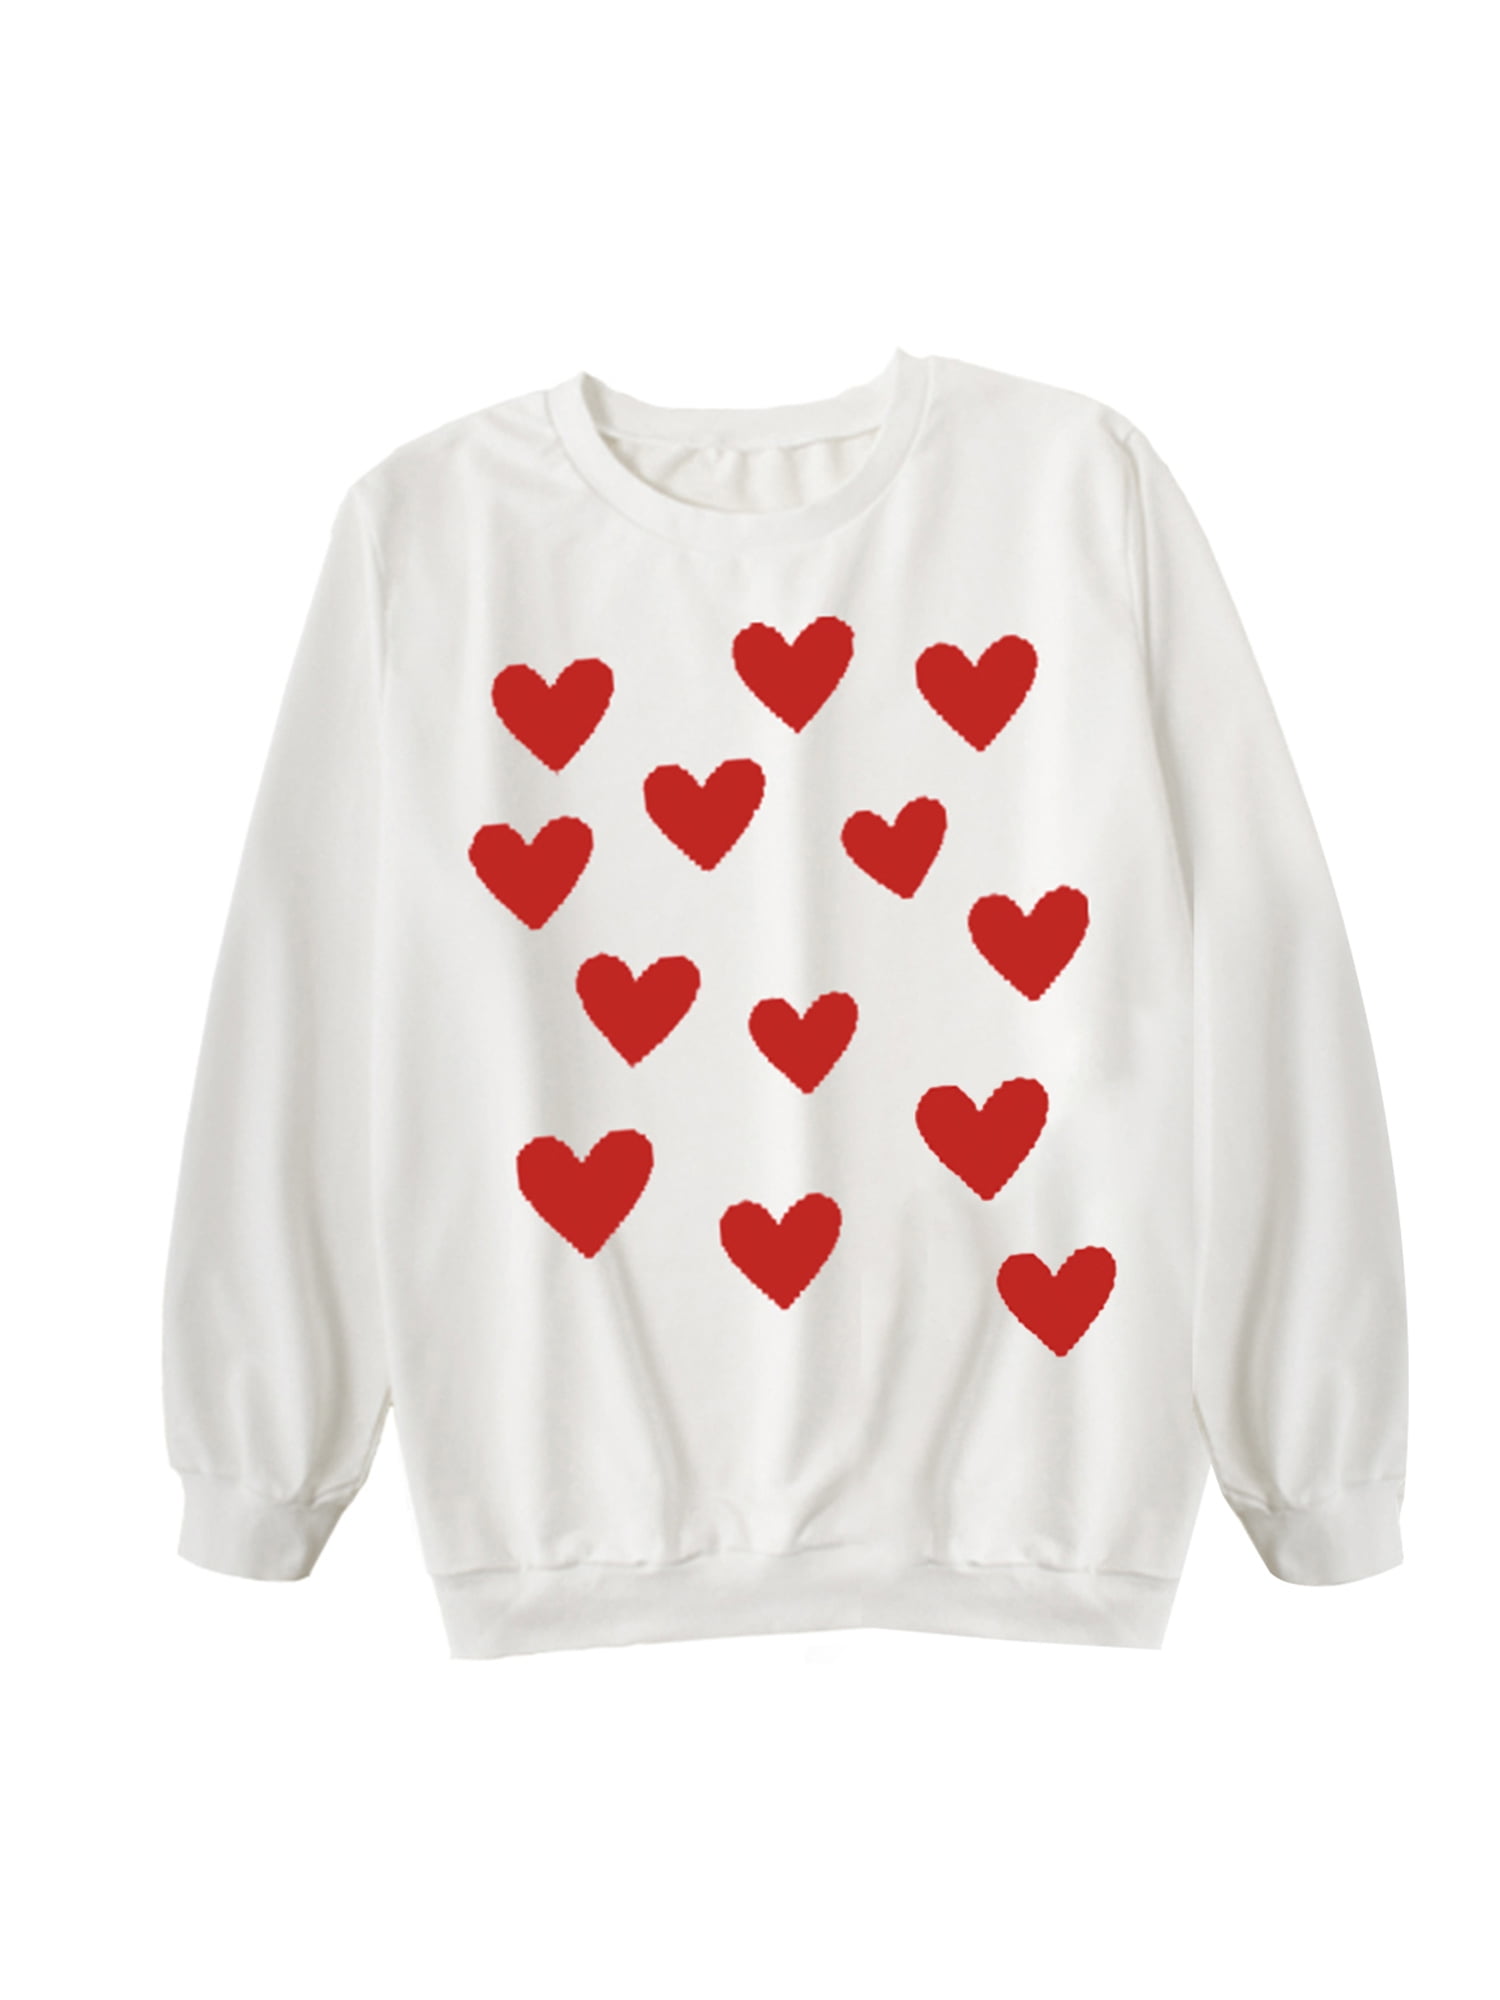 LSFYSZD Family Matching Sweatshirt, Valentines Heart Print Round-Neck ...